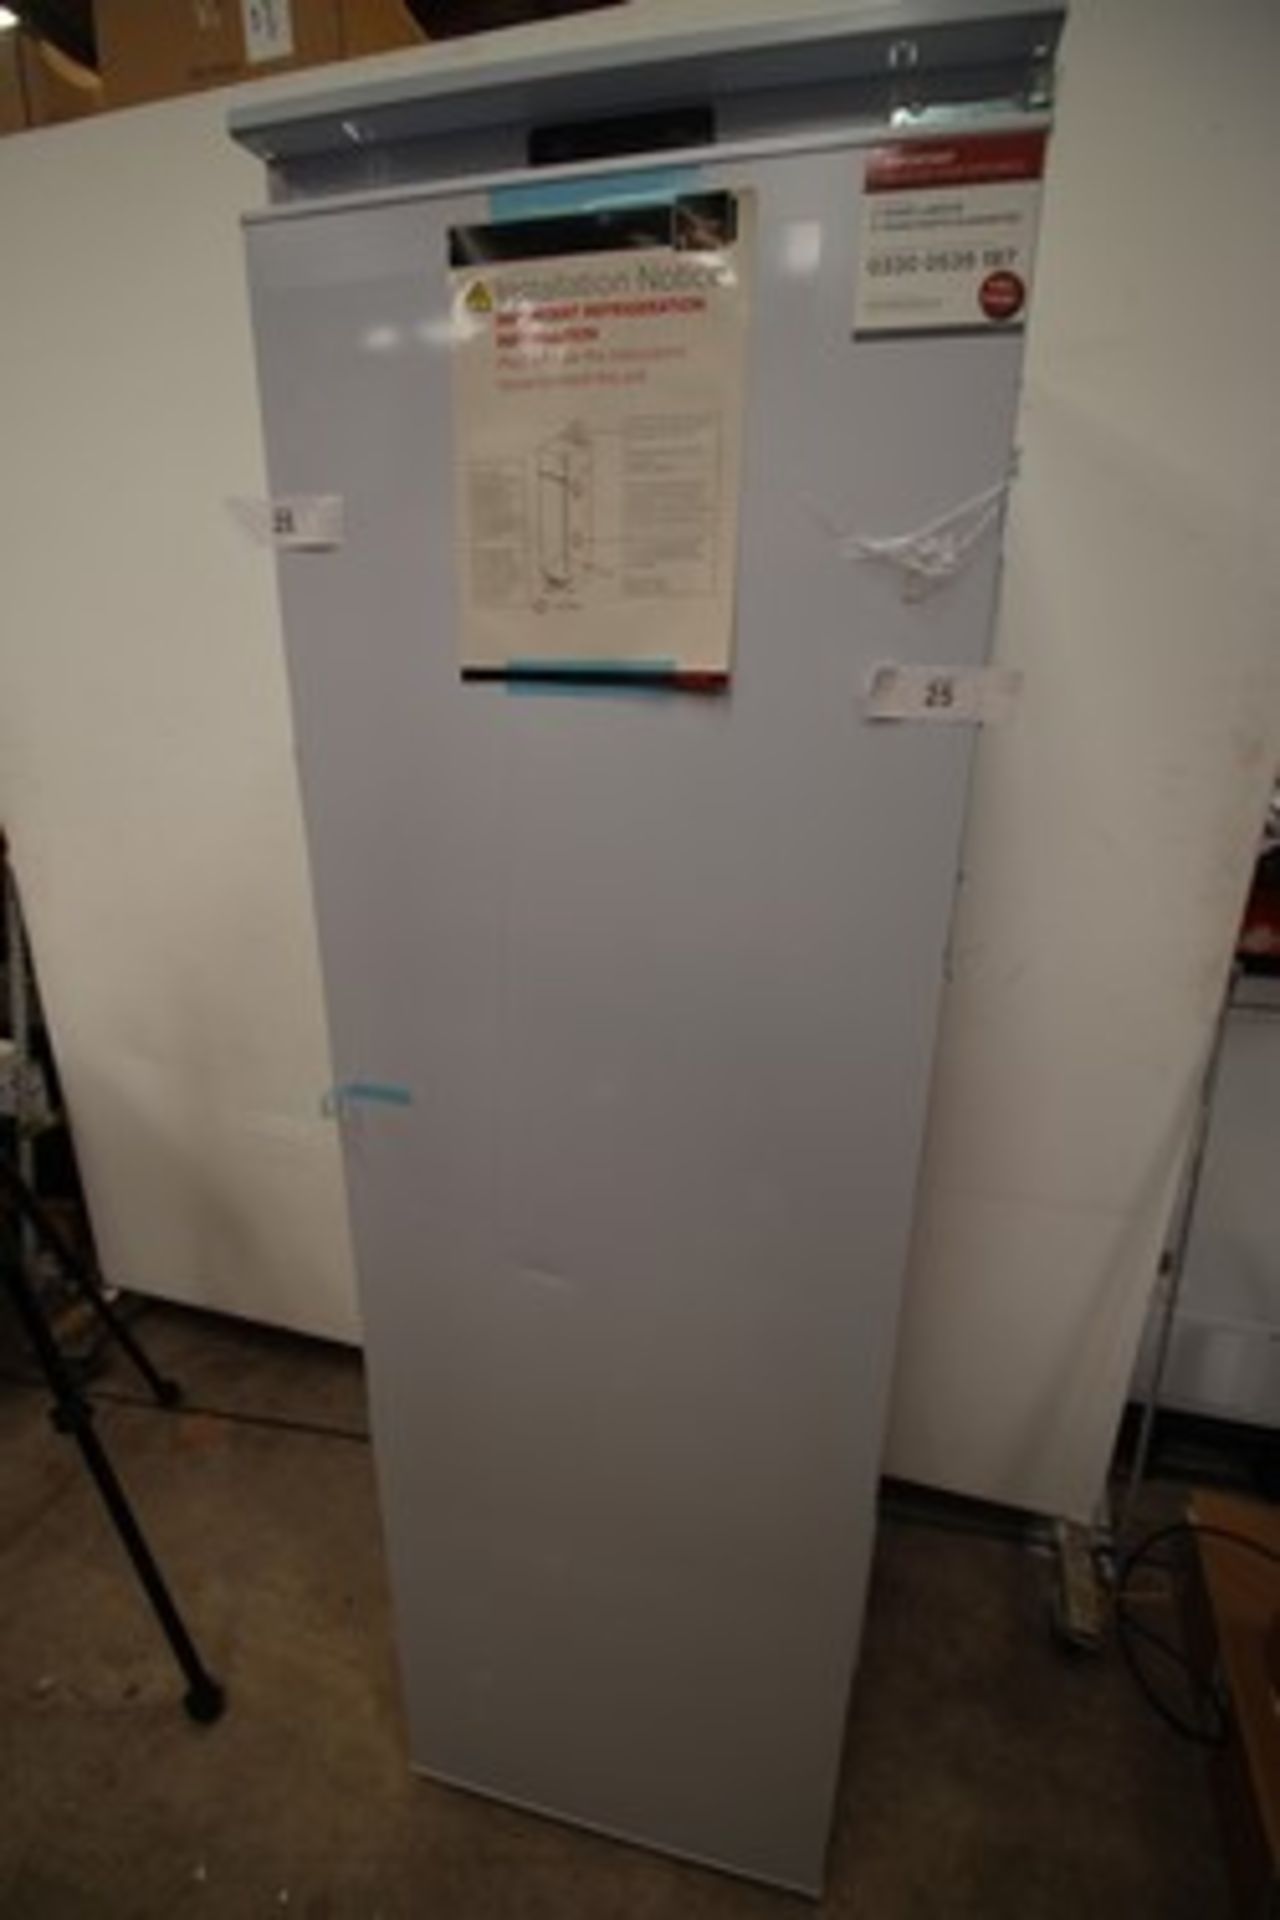 1 x CDA integrated larder fridge, model: FW821/3, 4cm dent on front panel - sealed new in box (ES4)